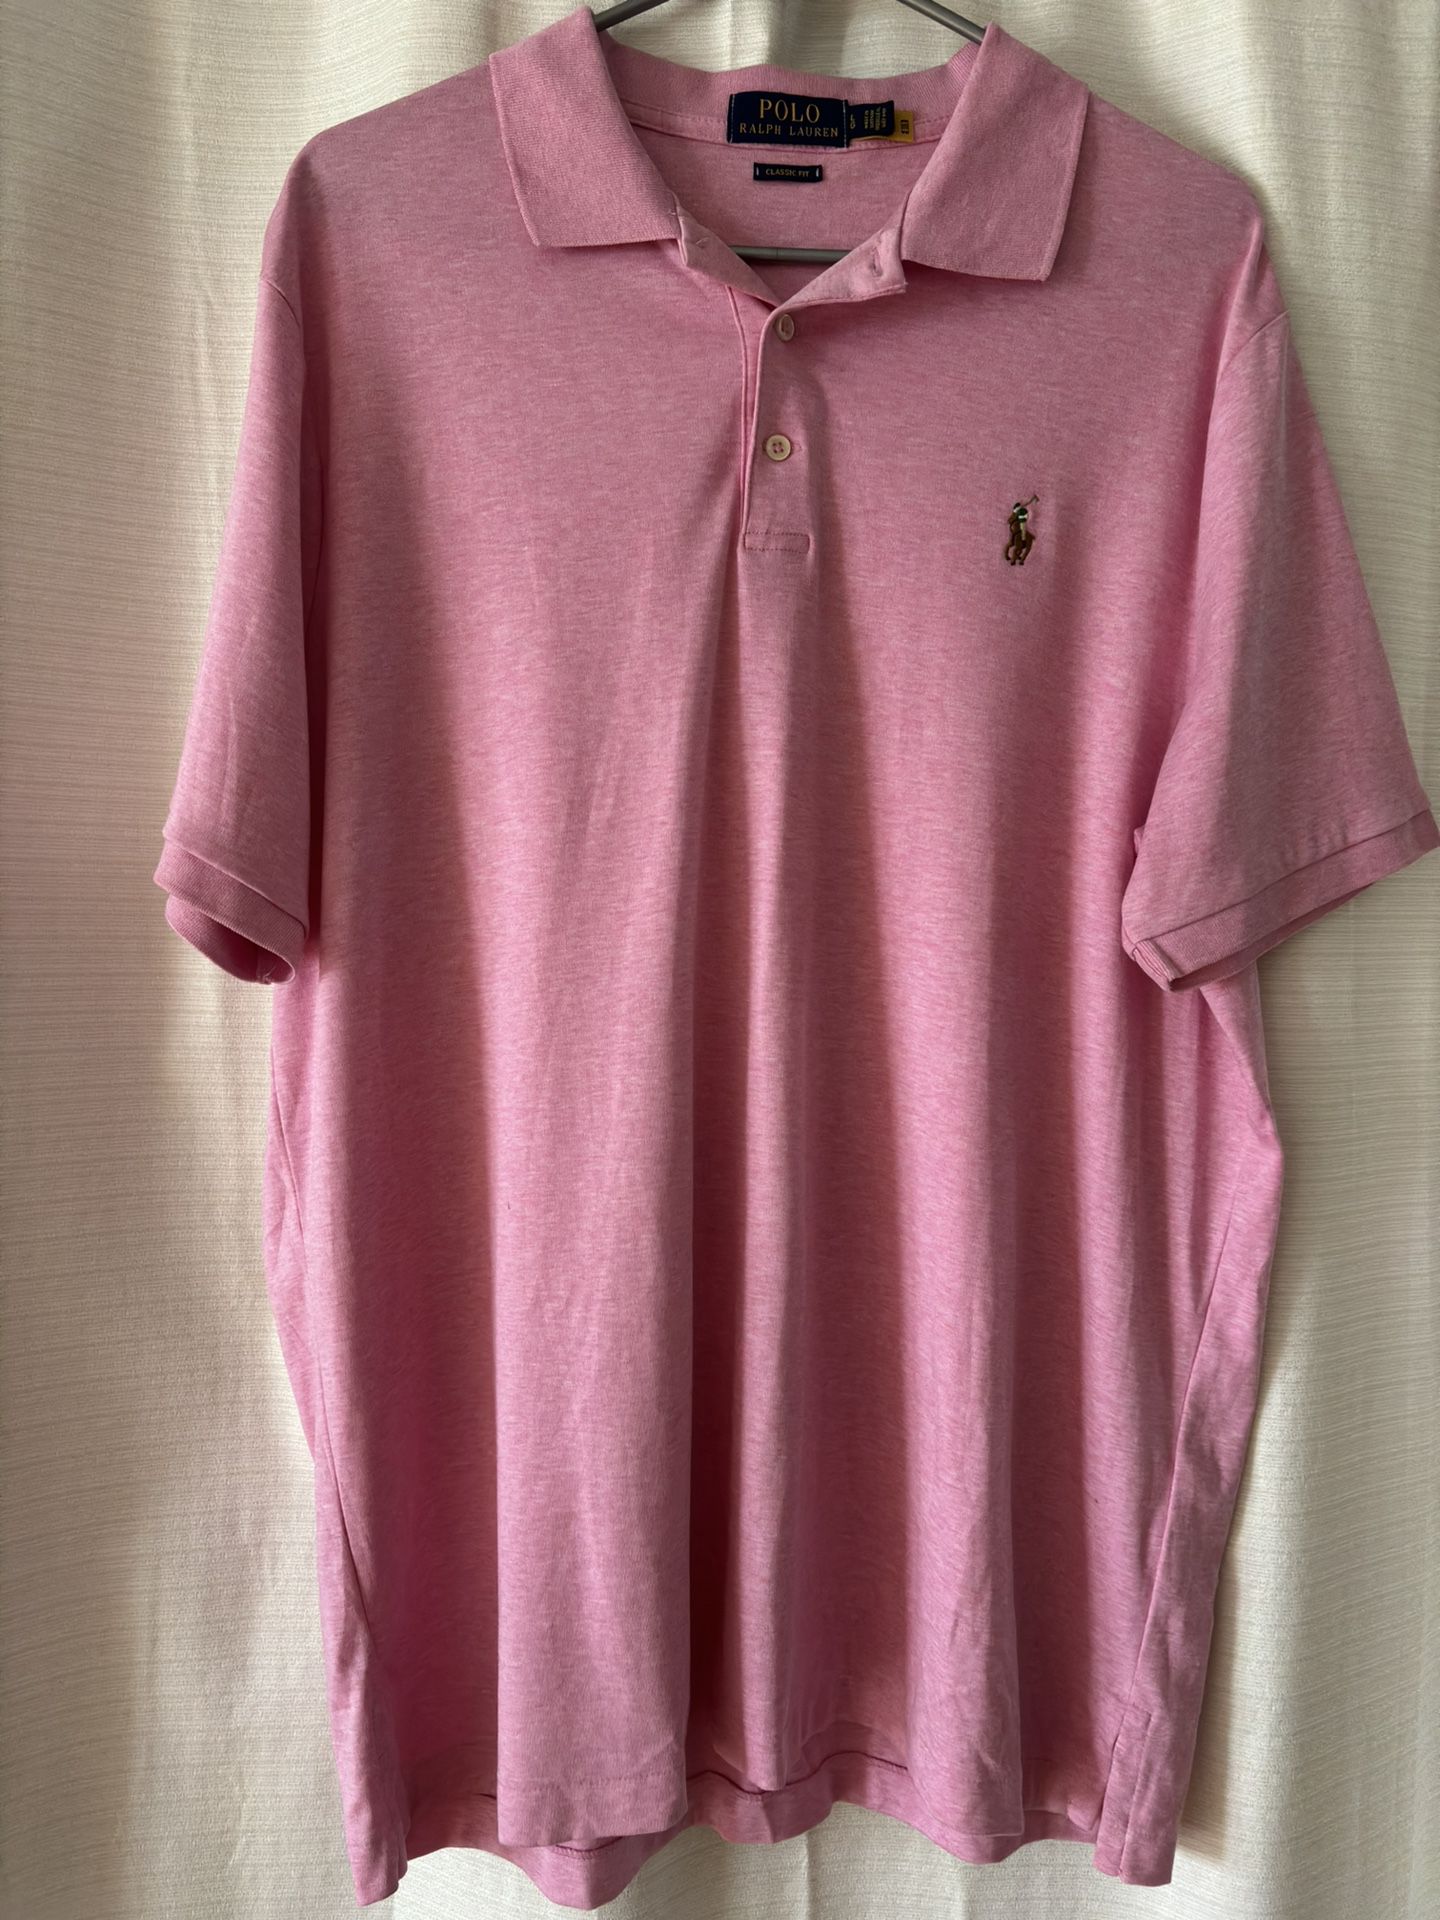 Polo Ralph Lauren Men's Coral Classic-Fit Soft Short-Sleeve Polo Shirt Sz Large